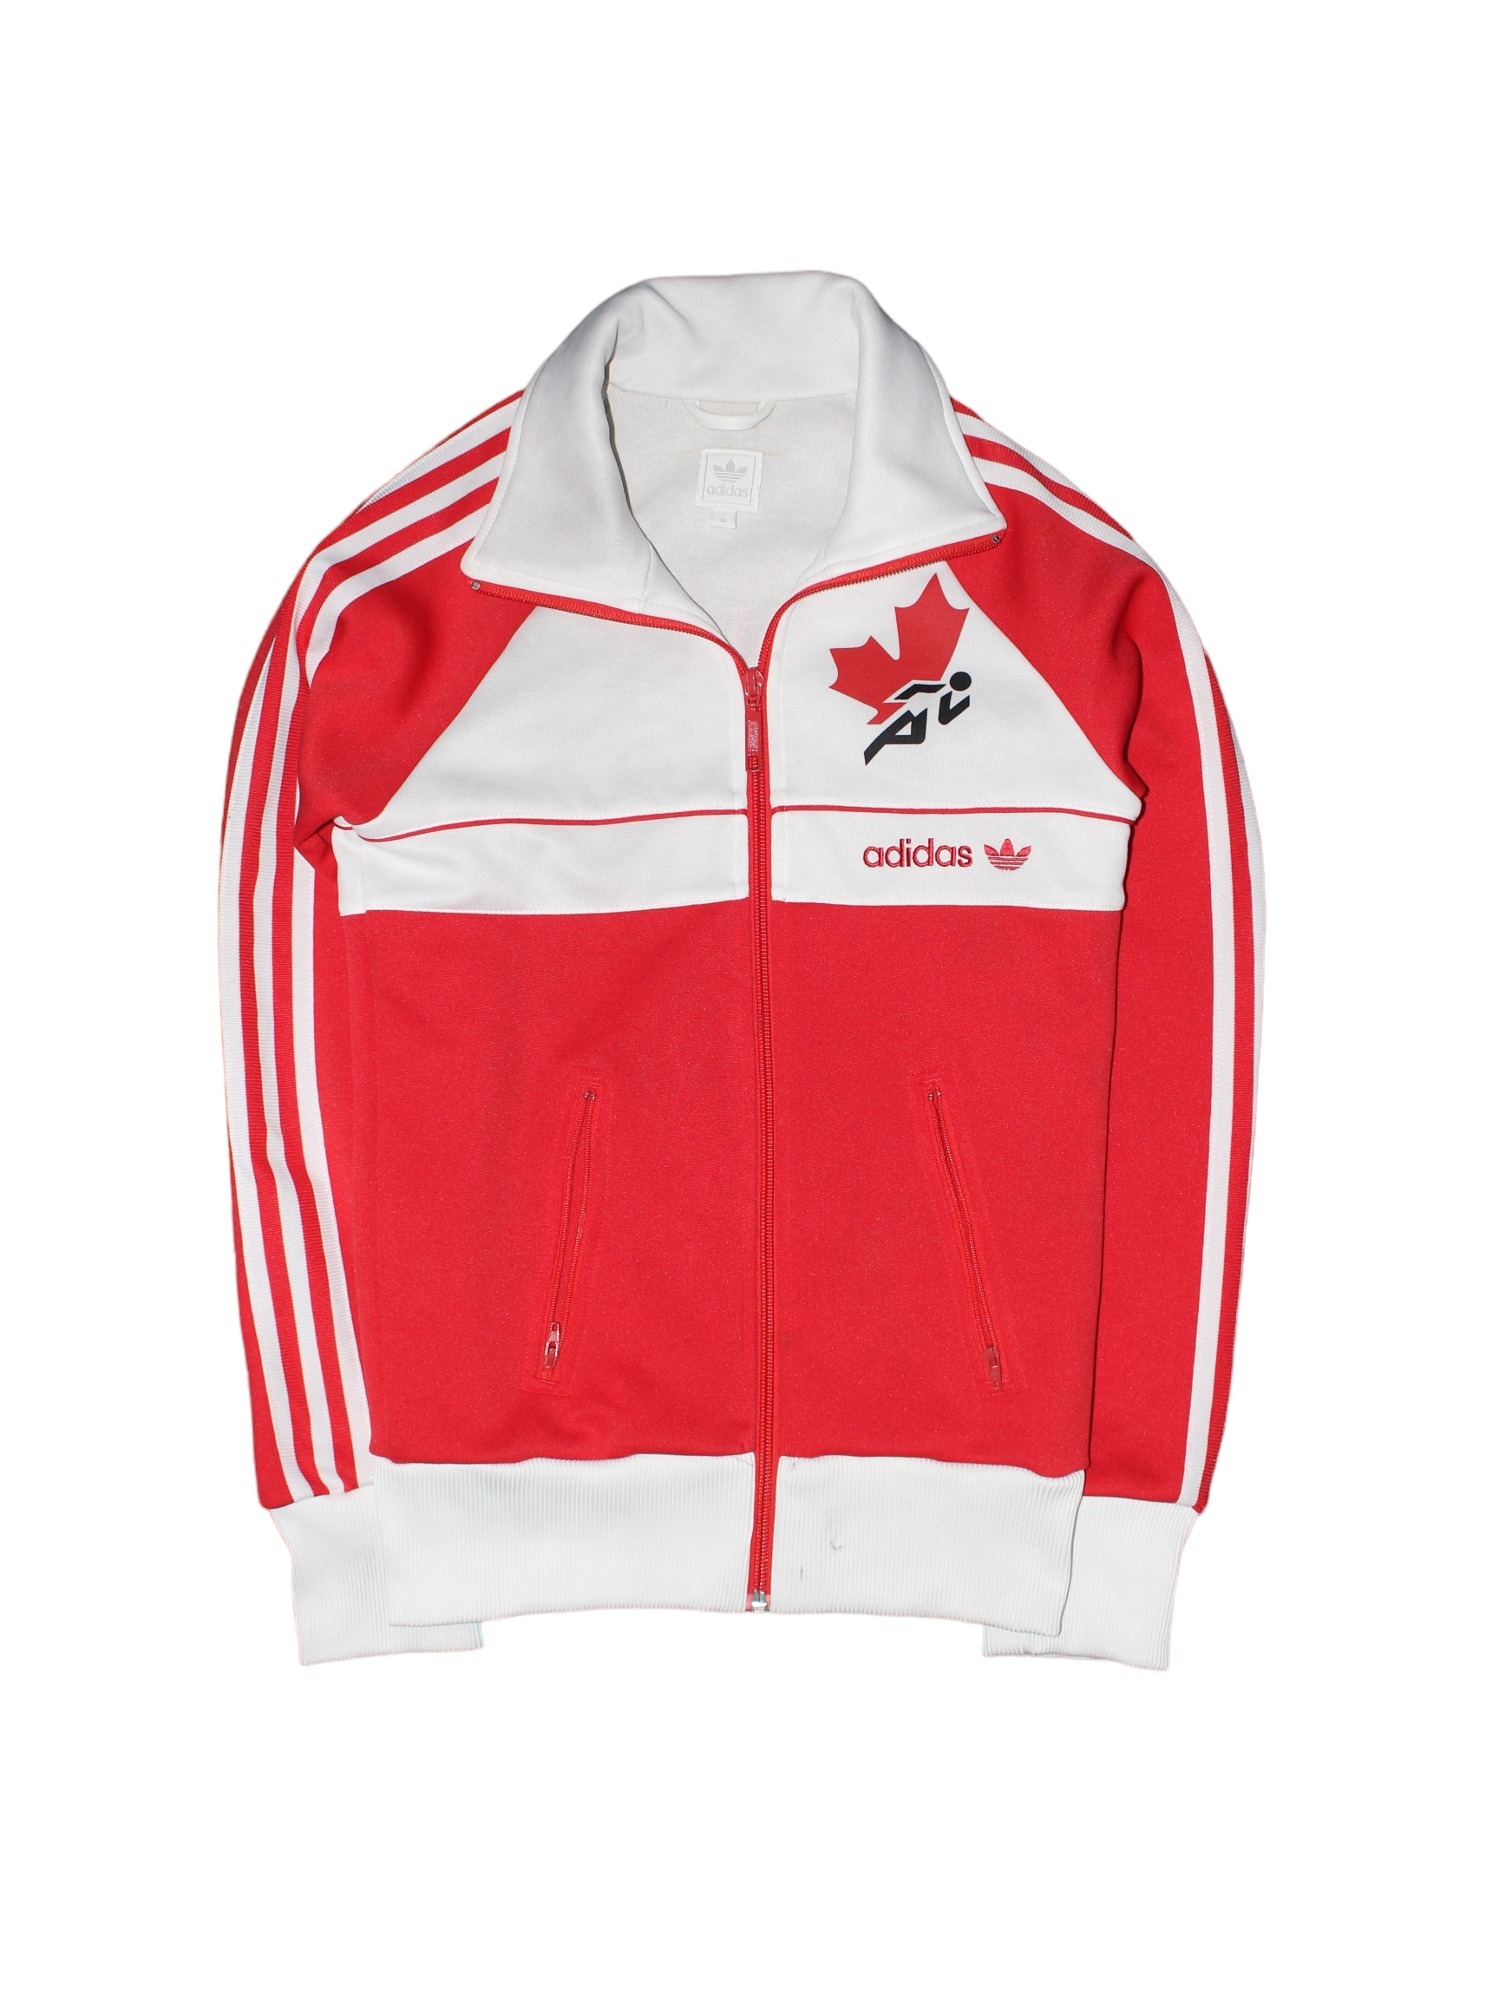 Adidas Canada Jersey